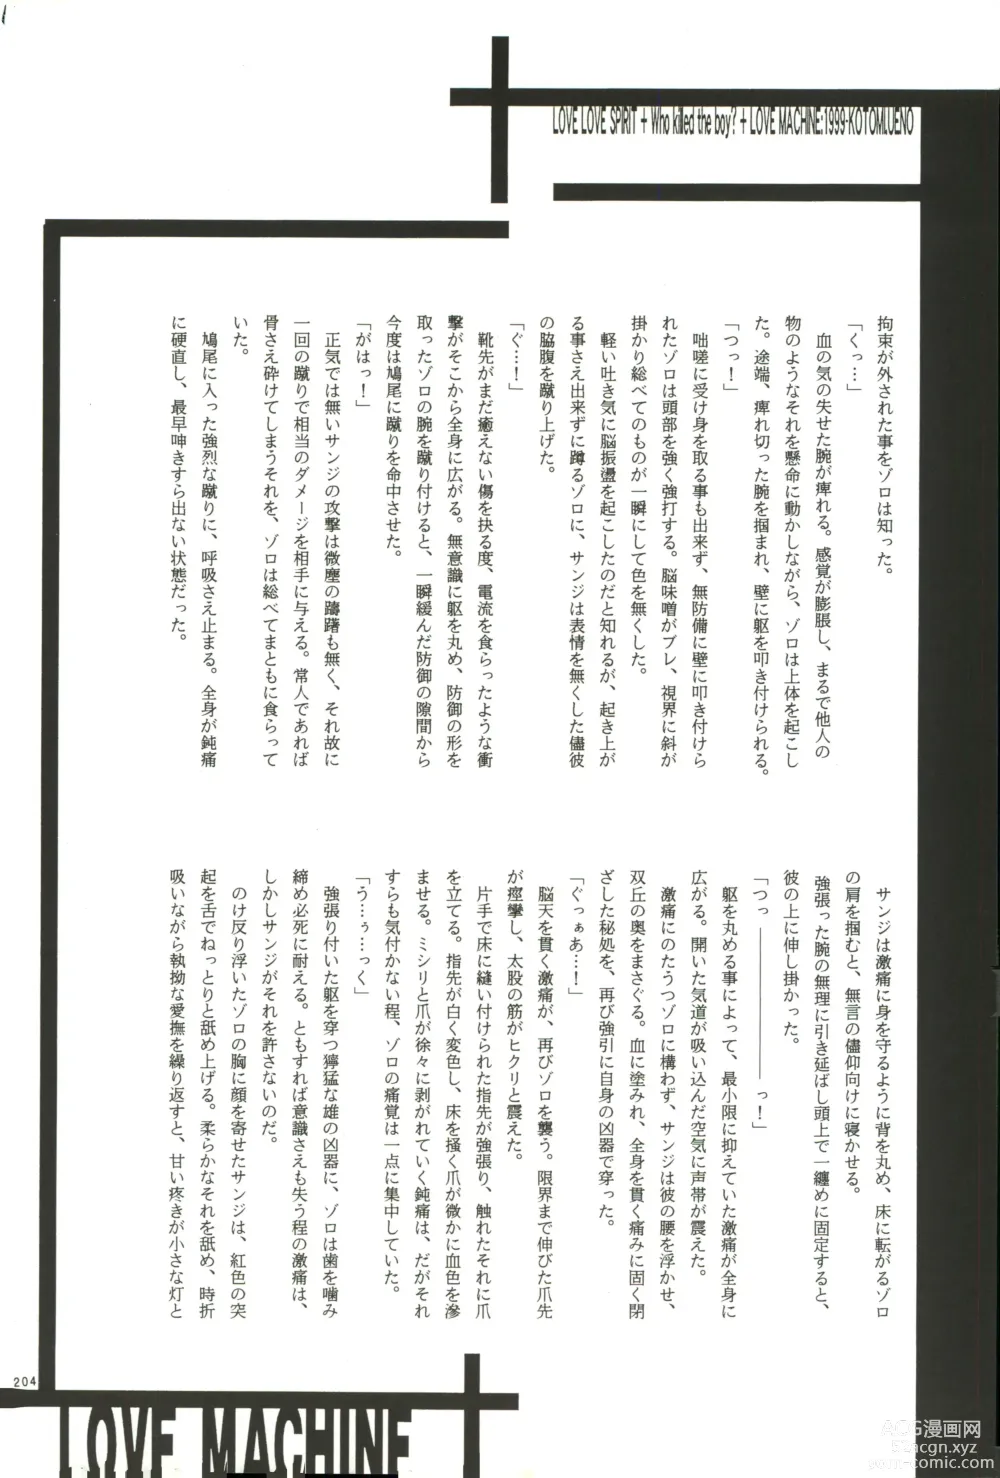 Page 203 of doujinshi FLASH BACK